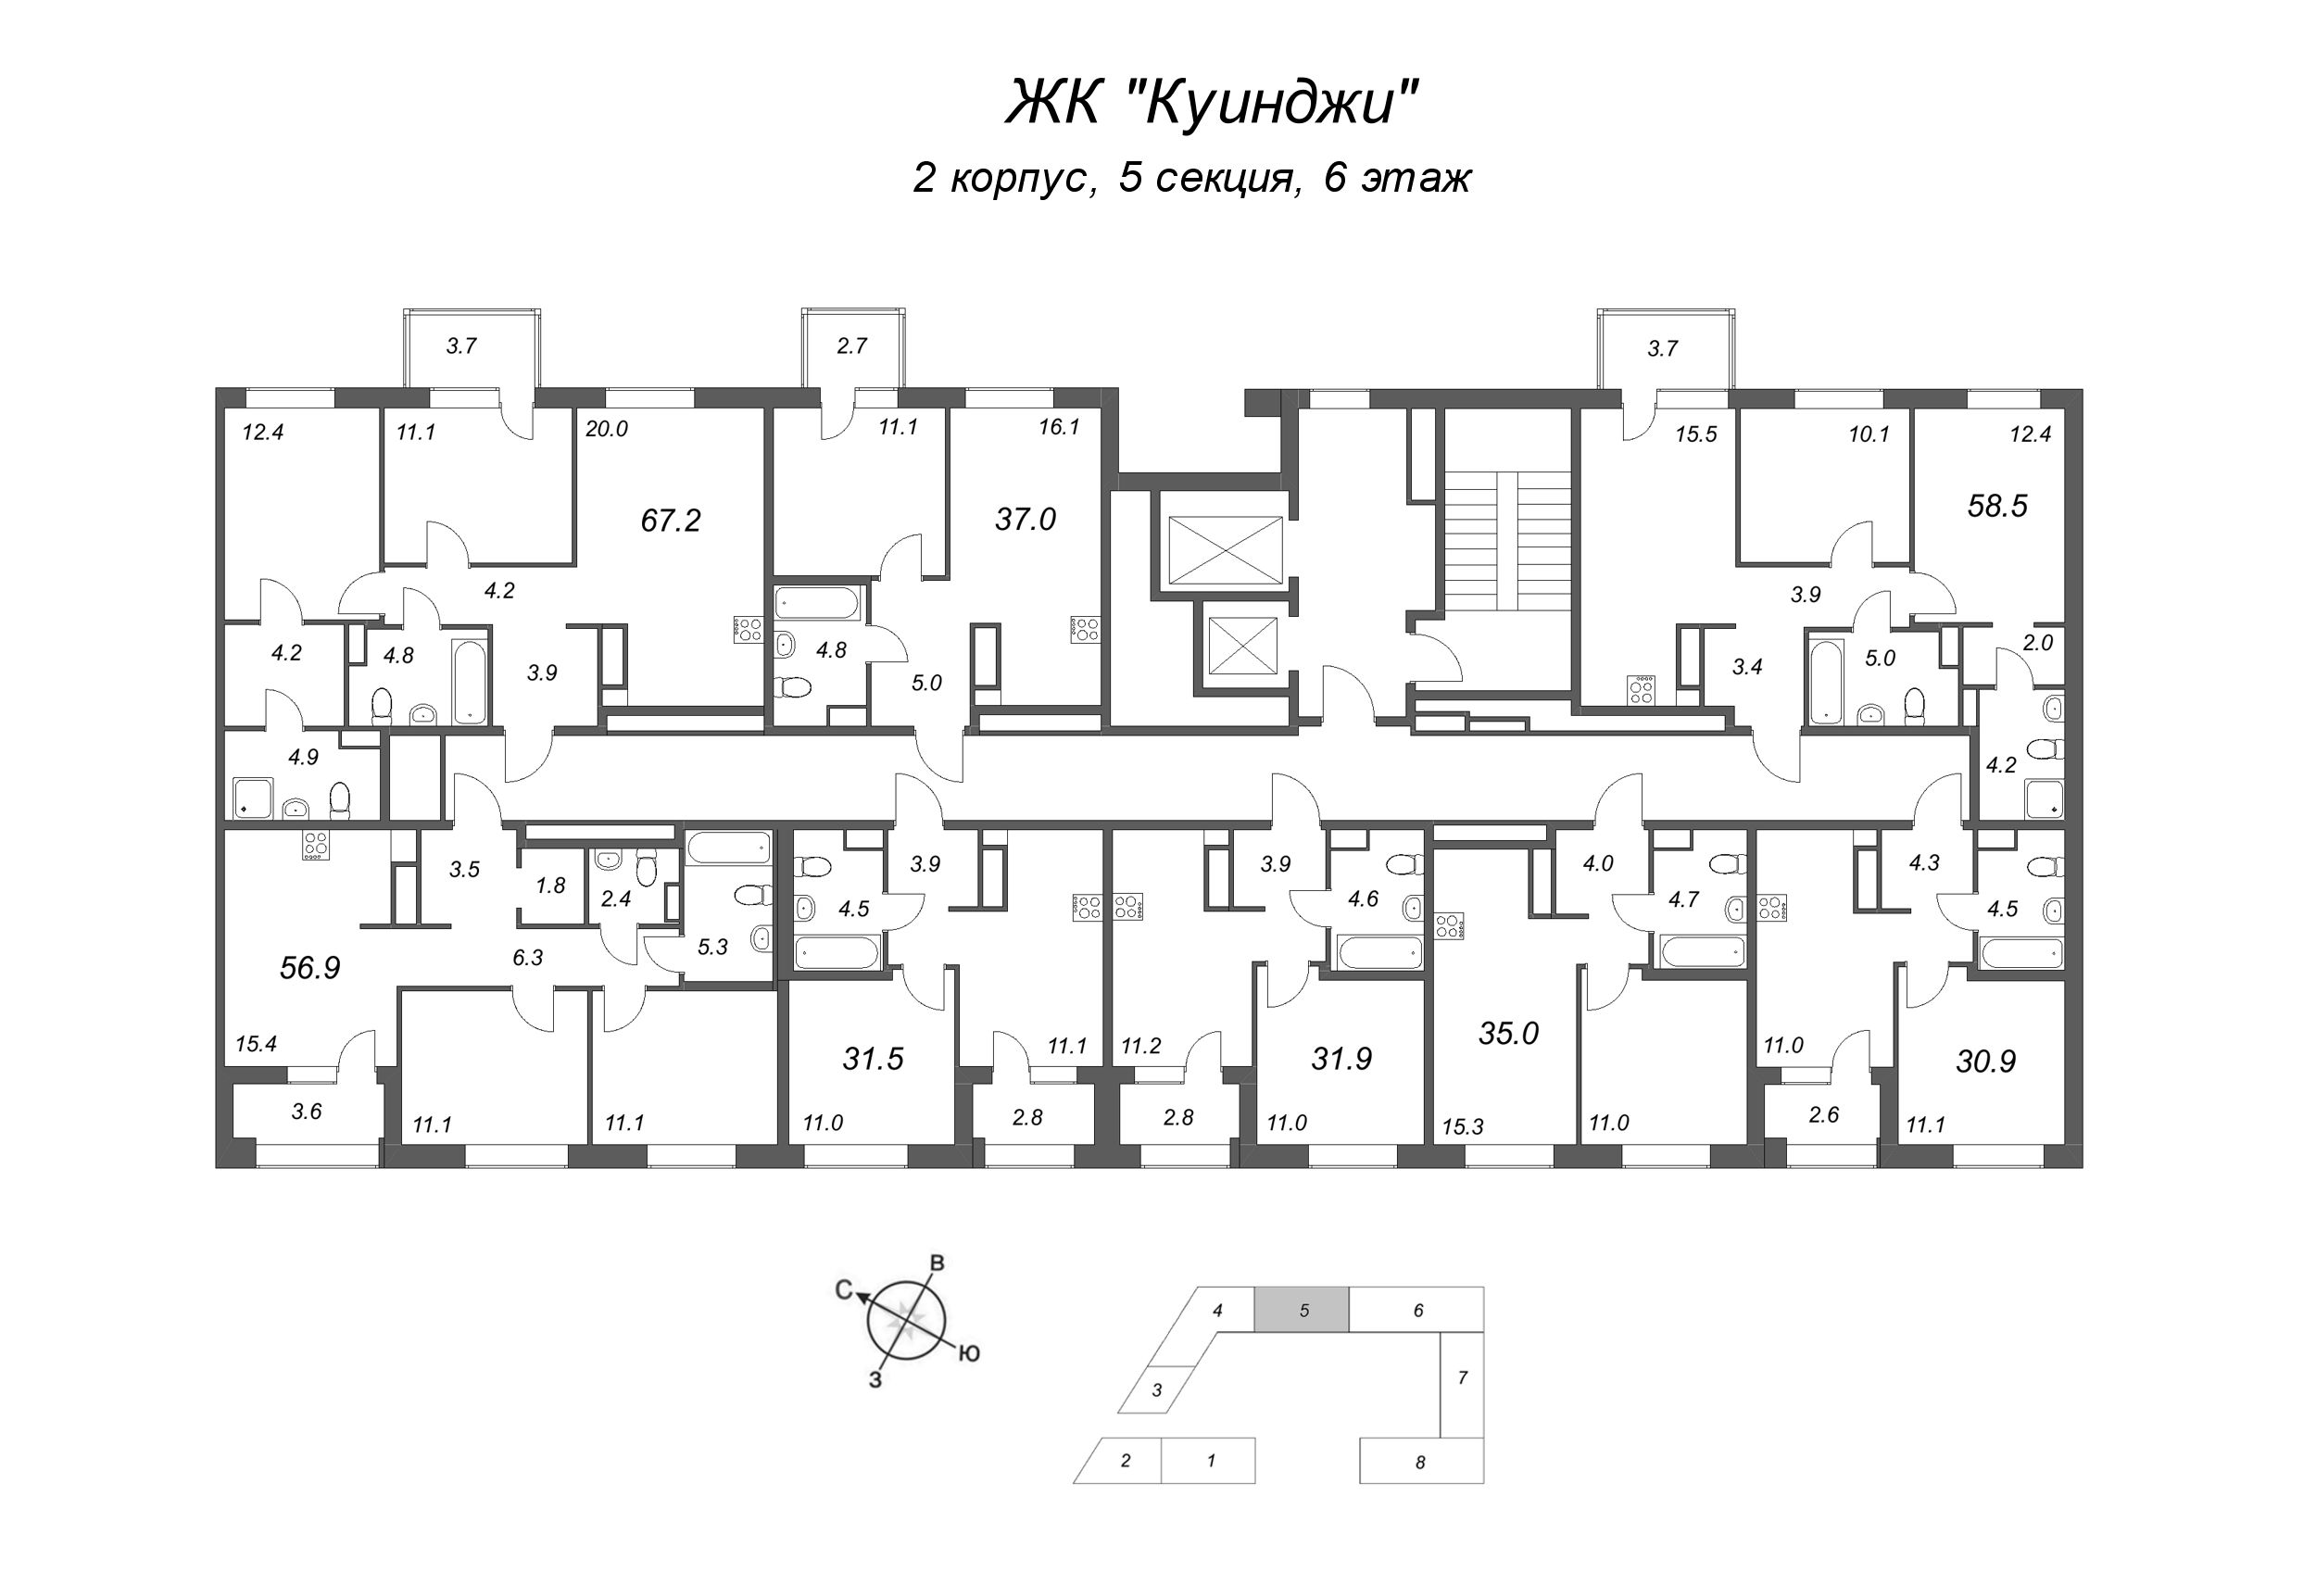 3-комнатная (Евро) квартира, 58.5 м² - планировка этажа